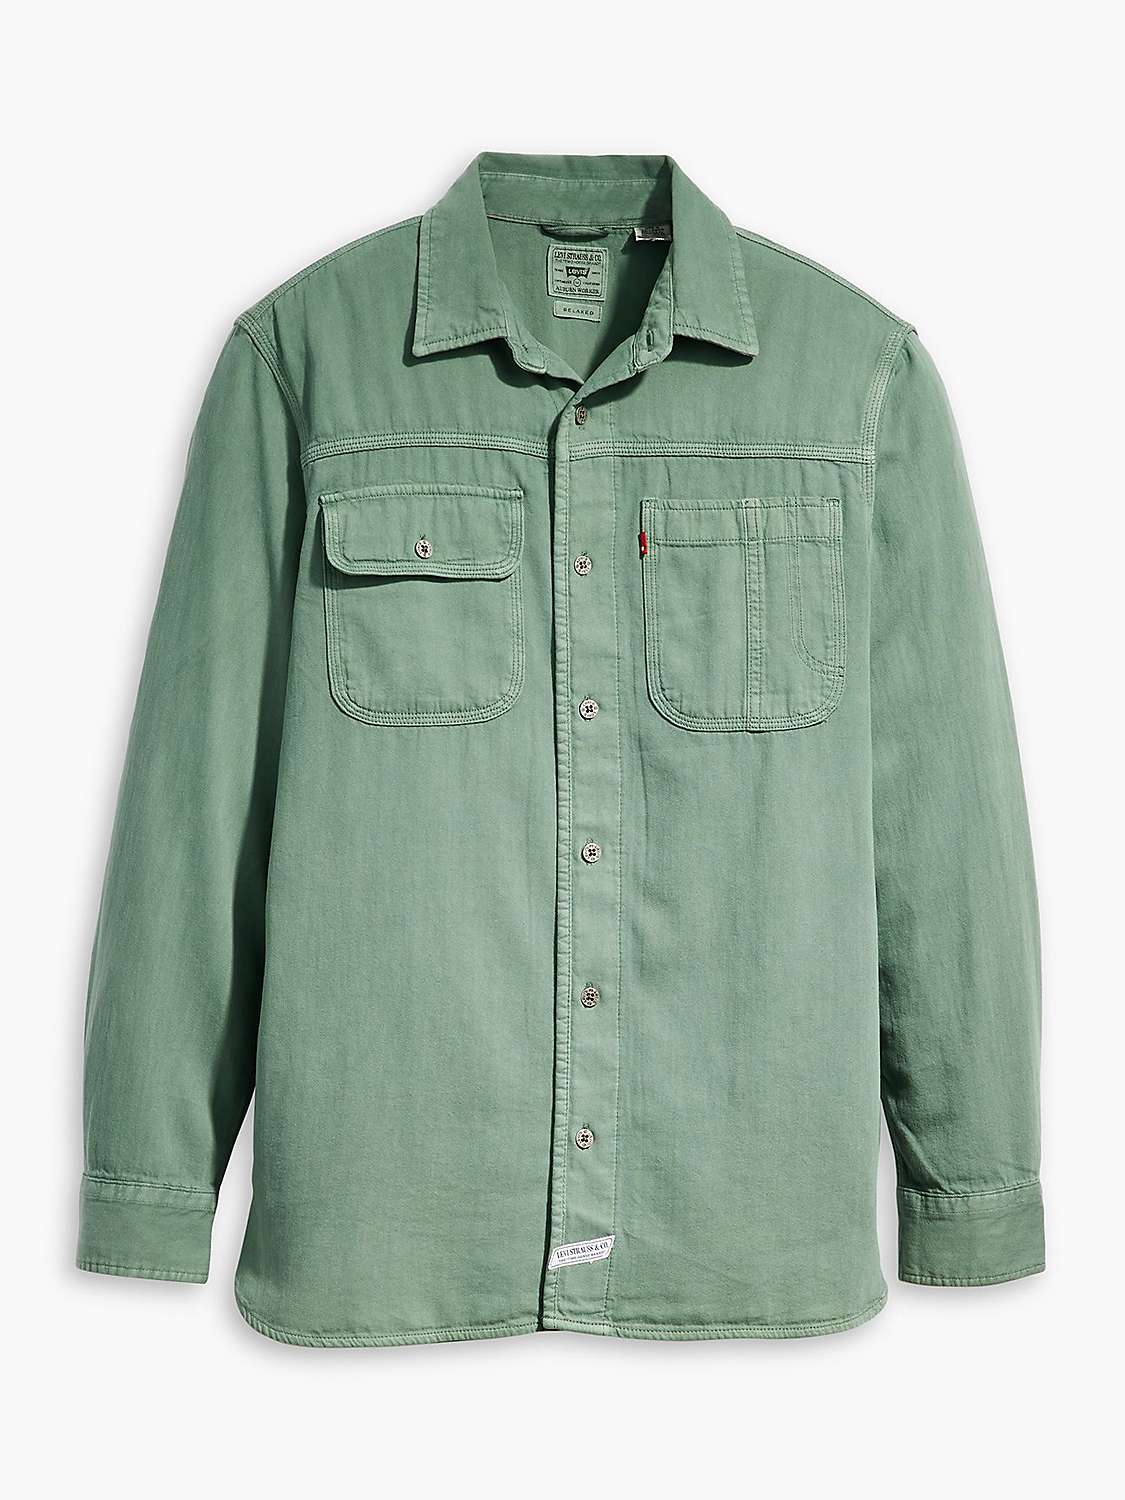 Buy Levi's Long Sleeve Auburn Worker Shirt Online at johnlewis.com